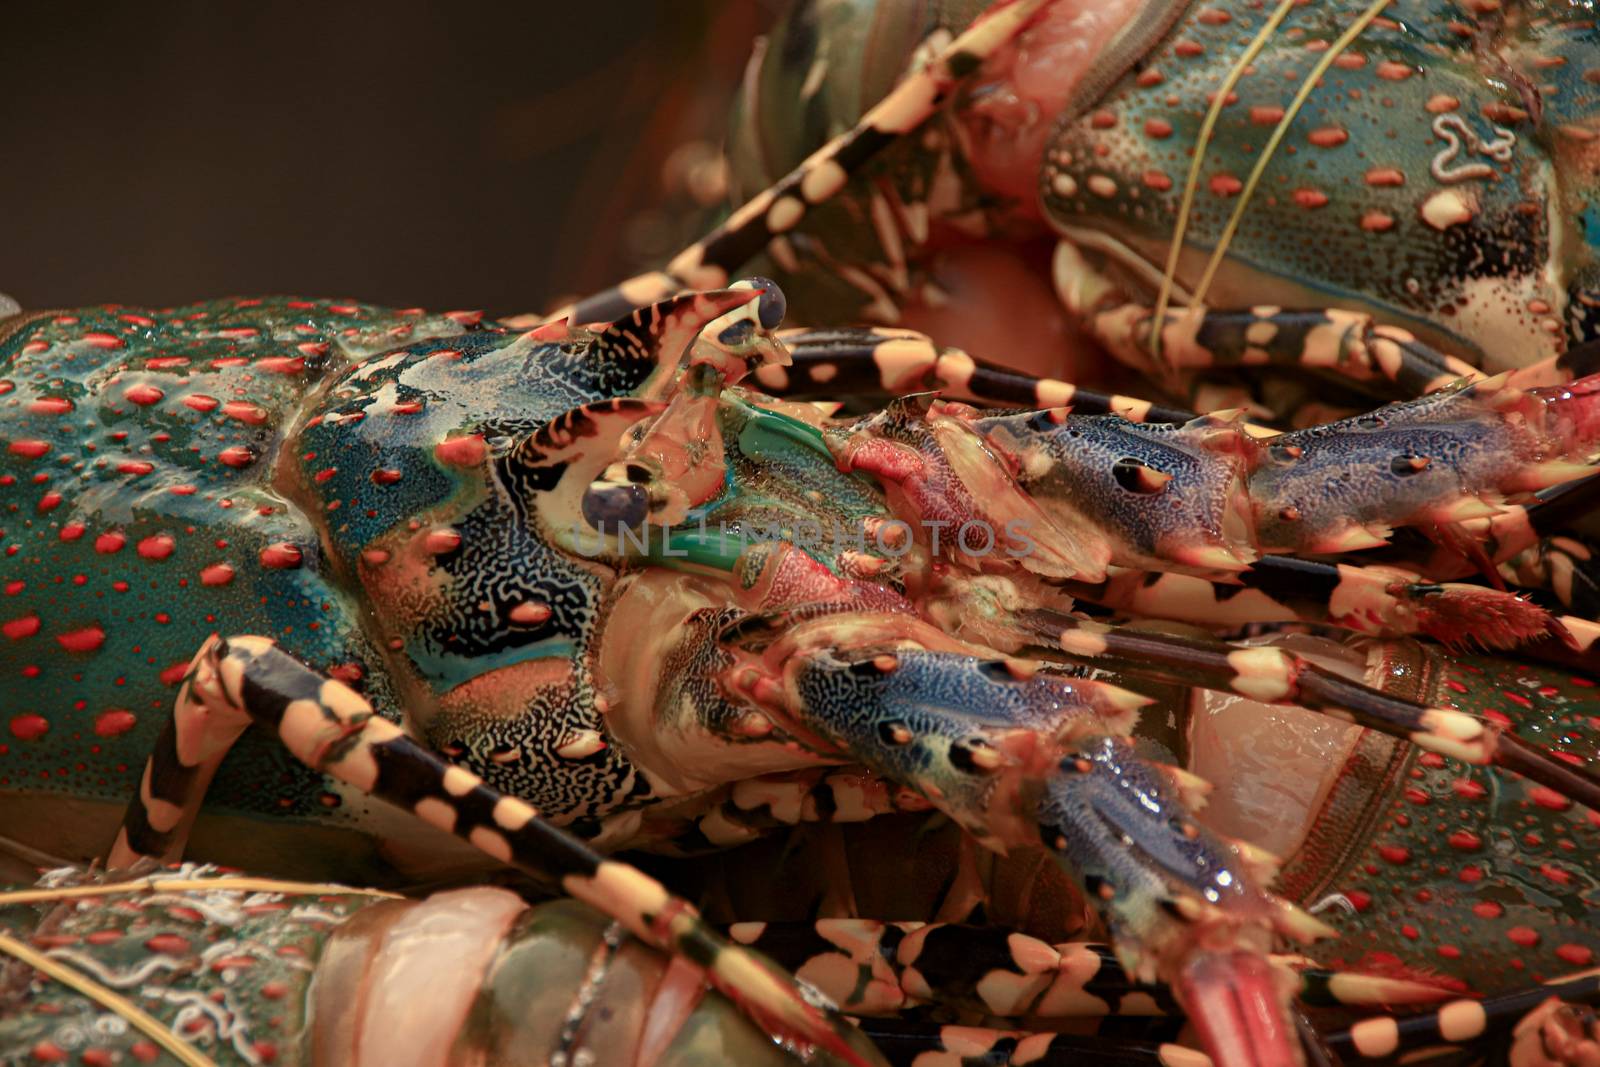 Blue Lobster by Sonnet15